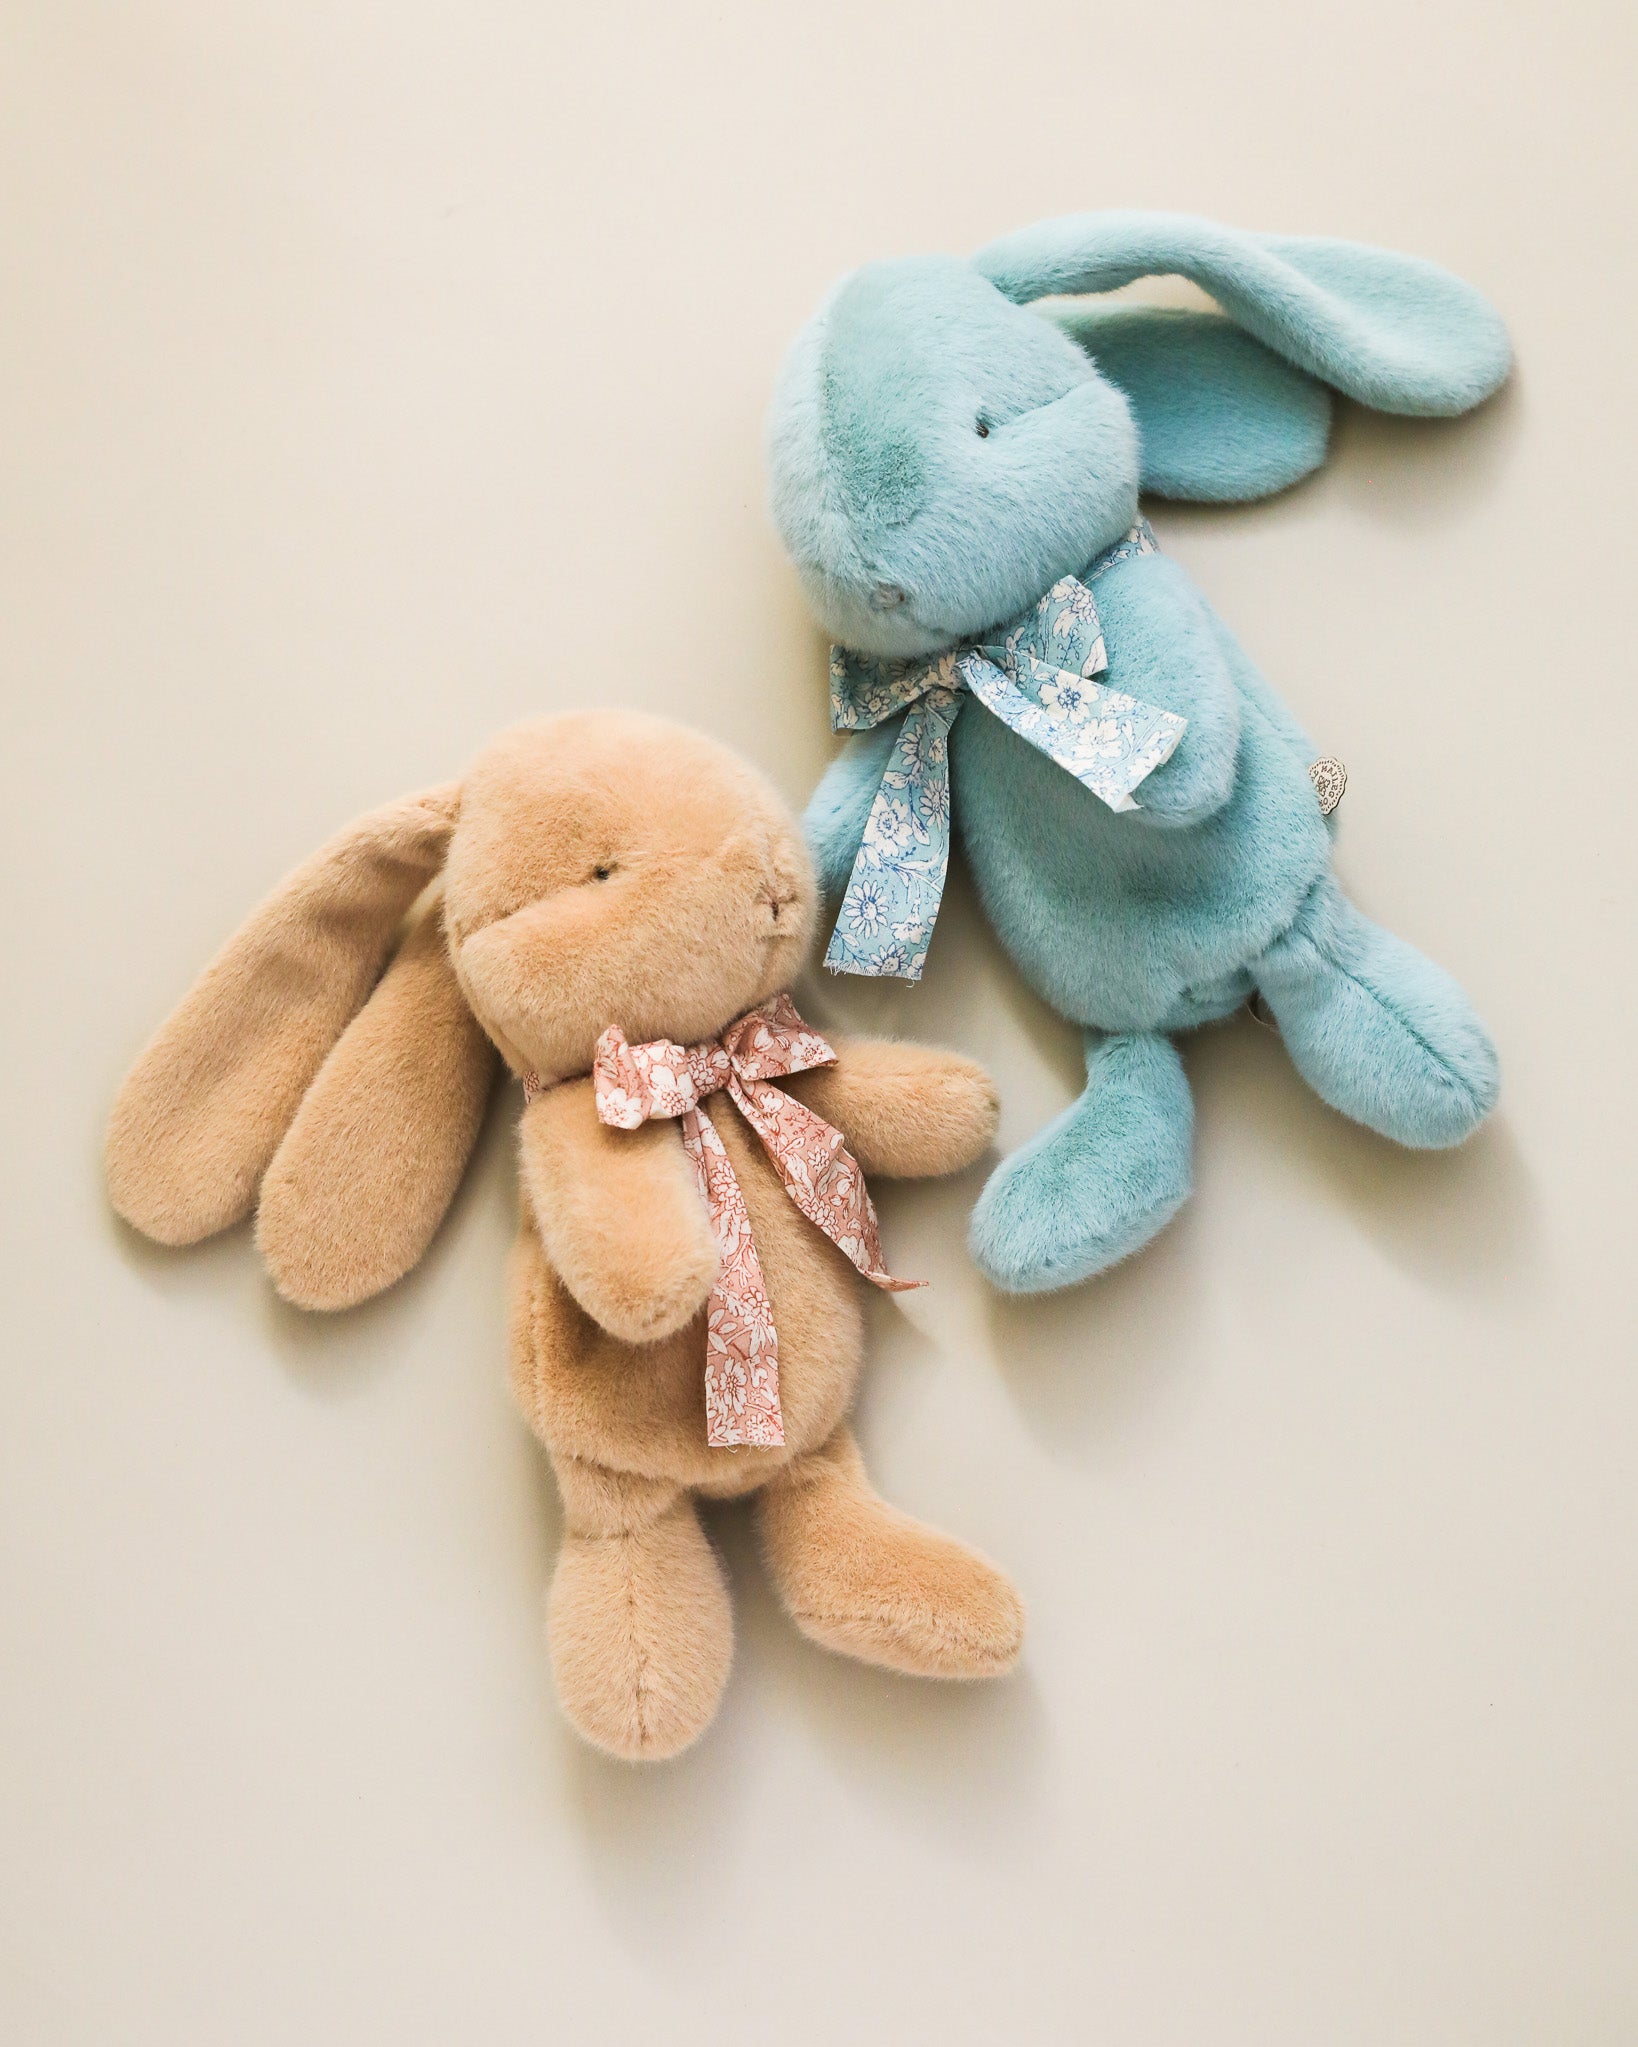 Maileg, Maileg mouse, Maileg bunny, Easter bunny, Easter Toys